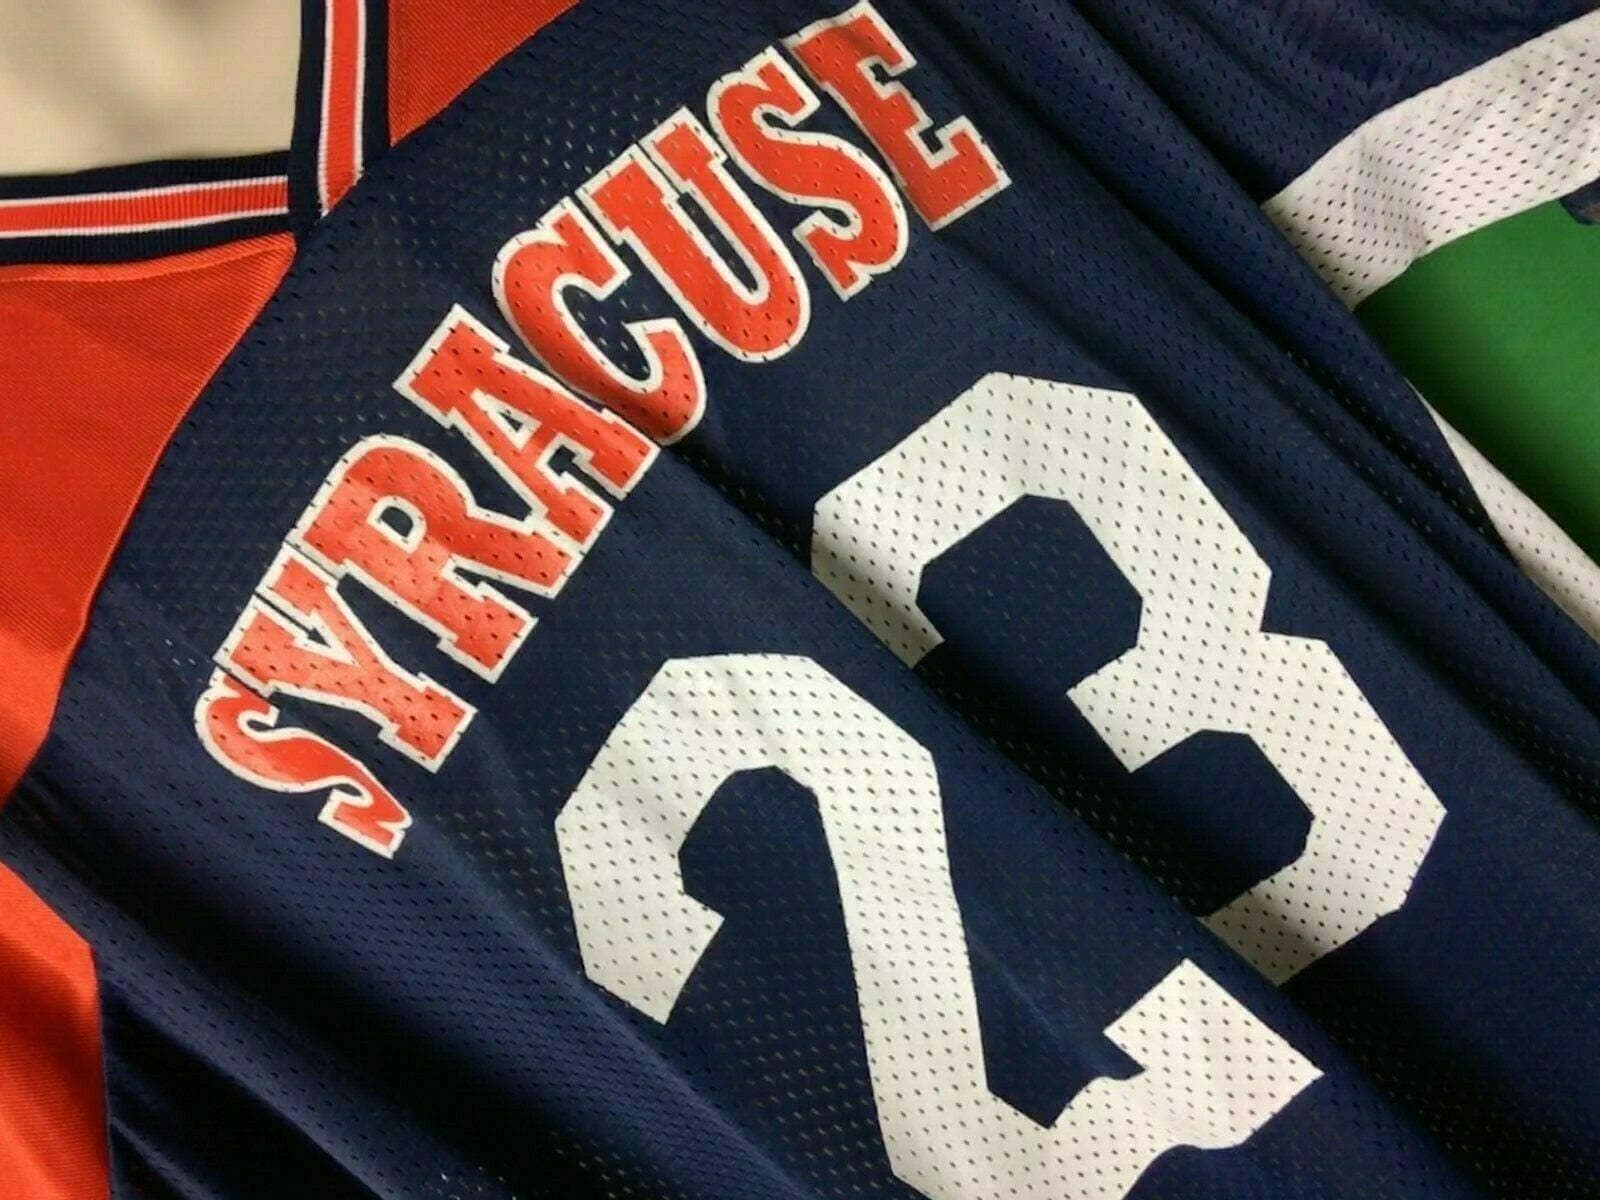 NCAA Syracuse Orange Fit 2 Win #23 Jersey Men's X-Large NWT